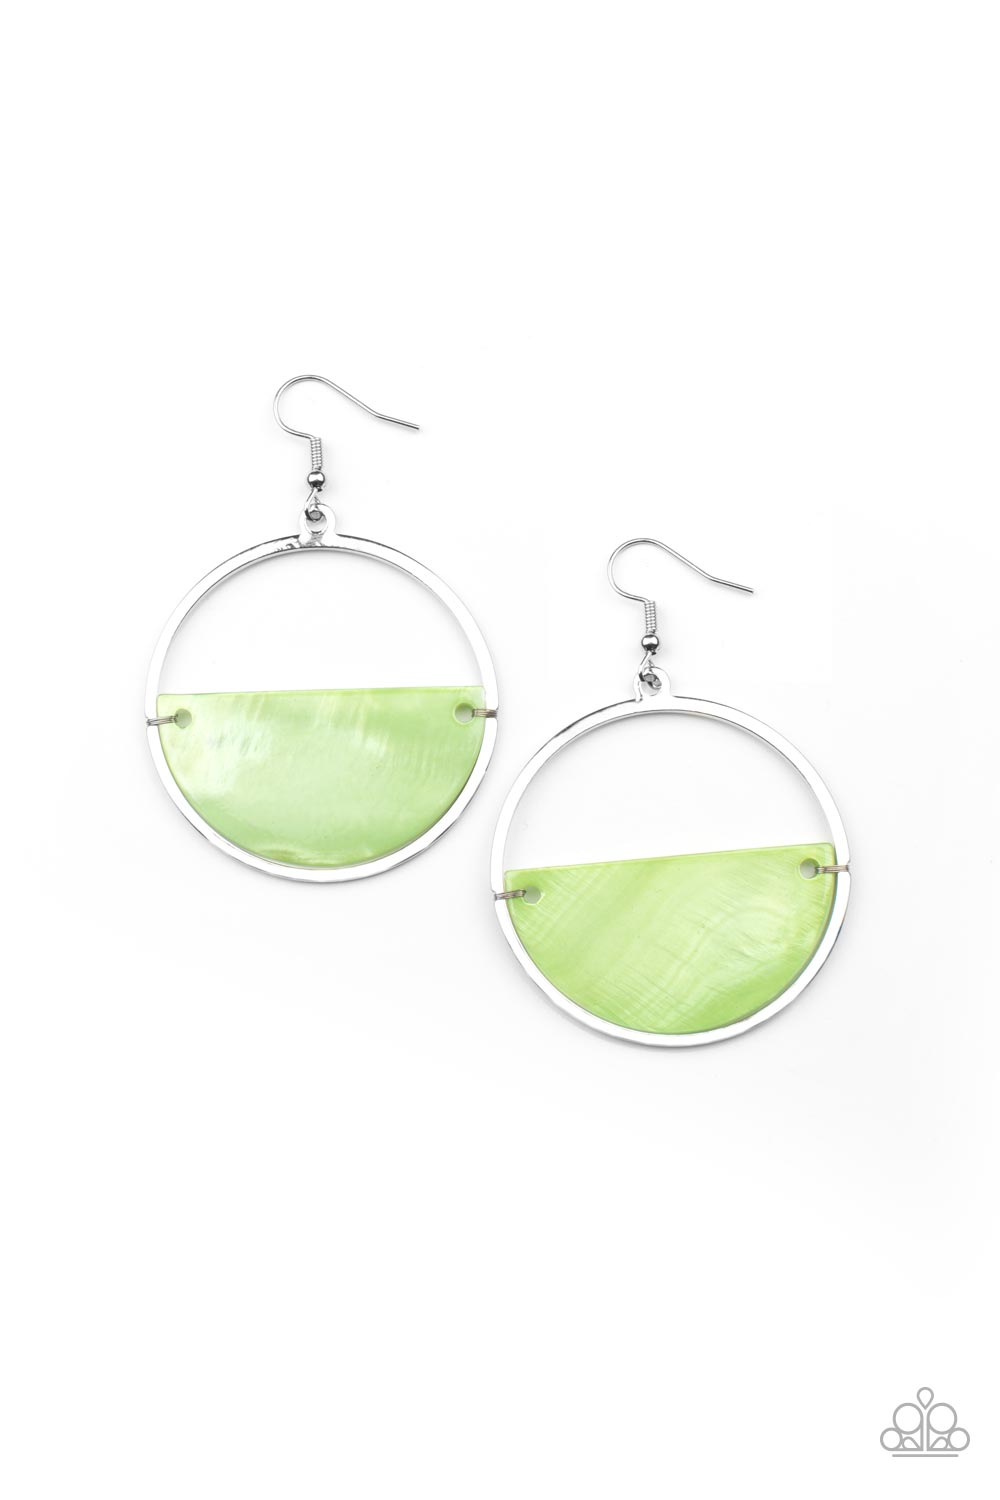 Paparazzi Accessories - Seashore Vibes #E551 - Green Earrings